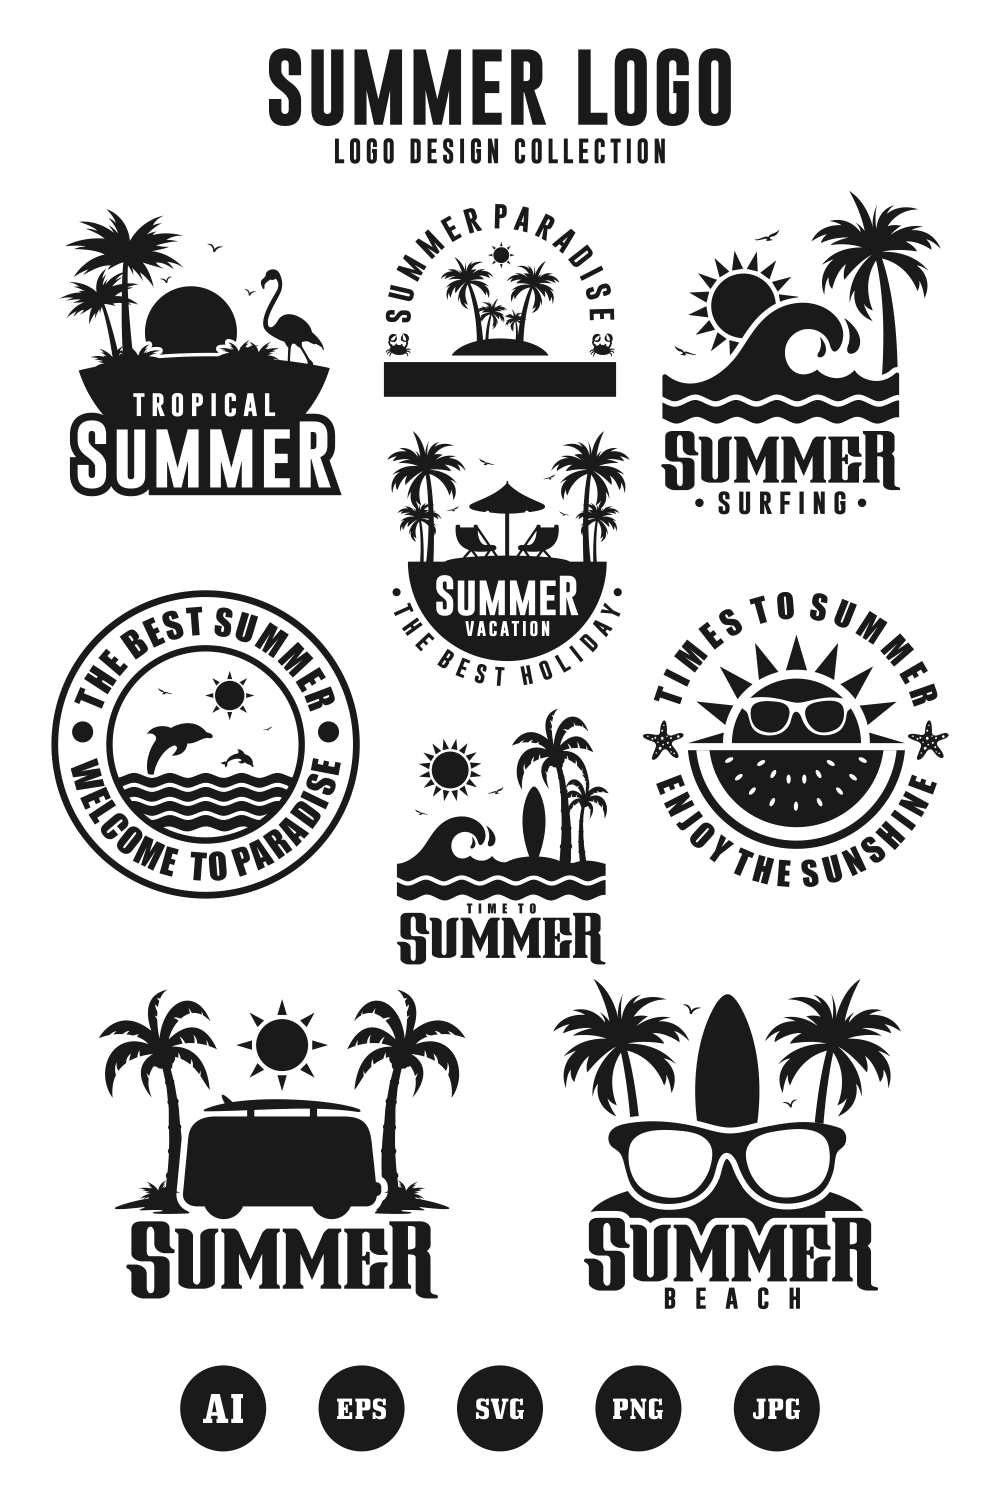 9 Summer logo design collection pinterest preview image.